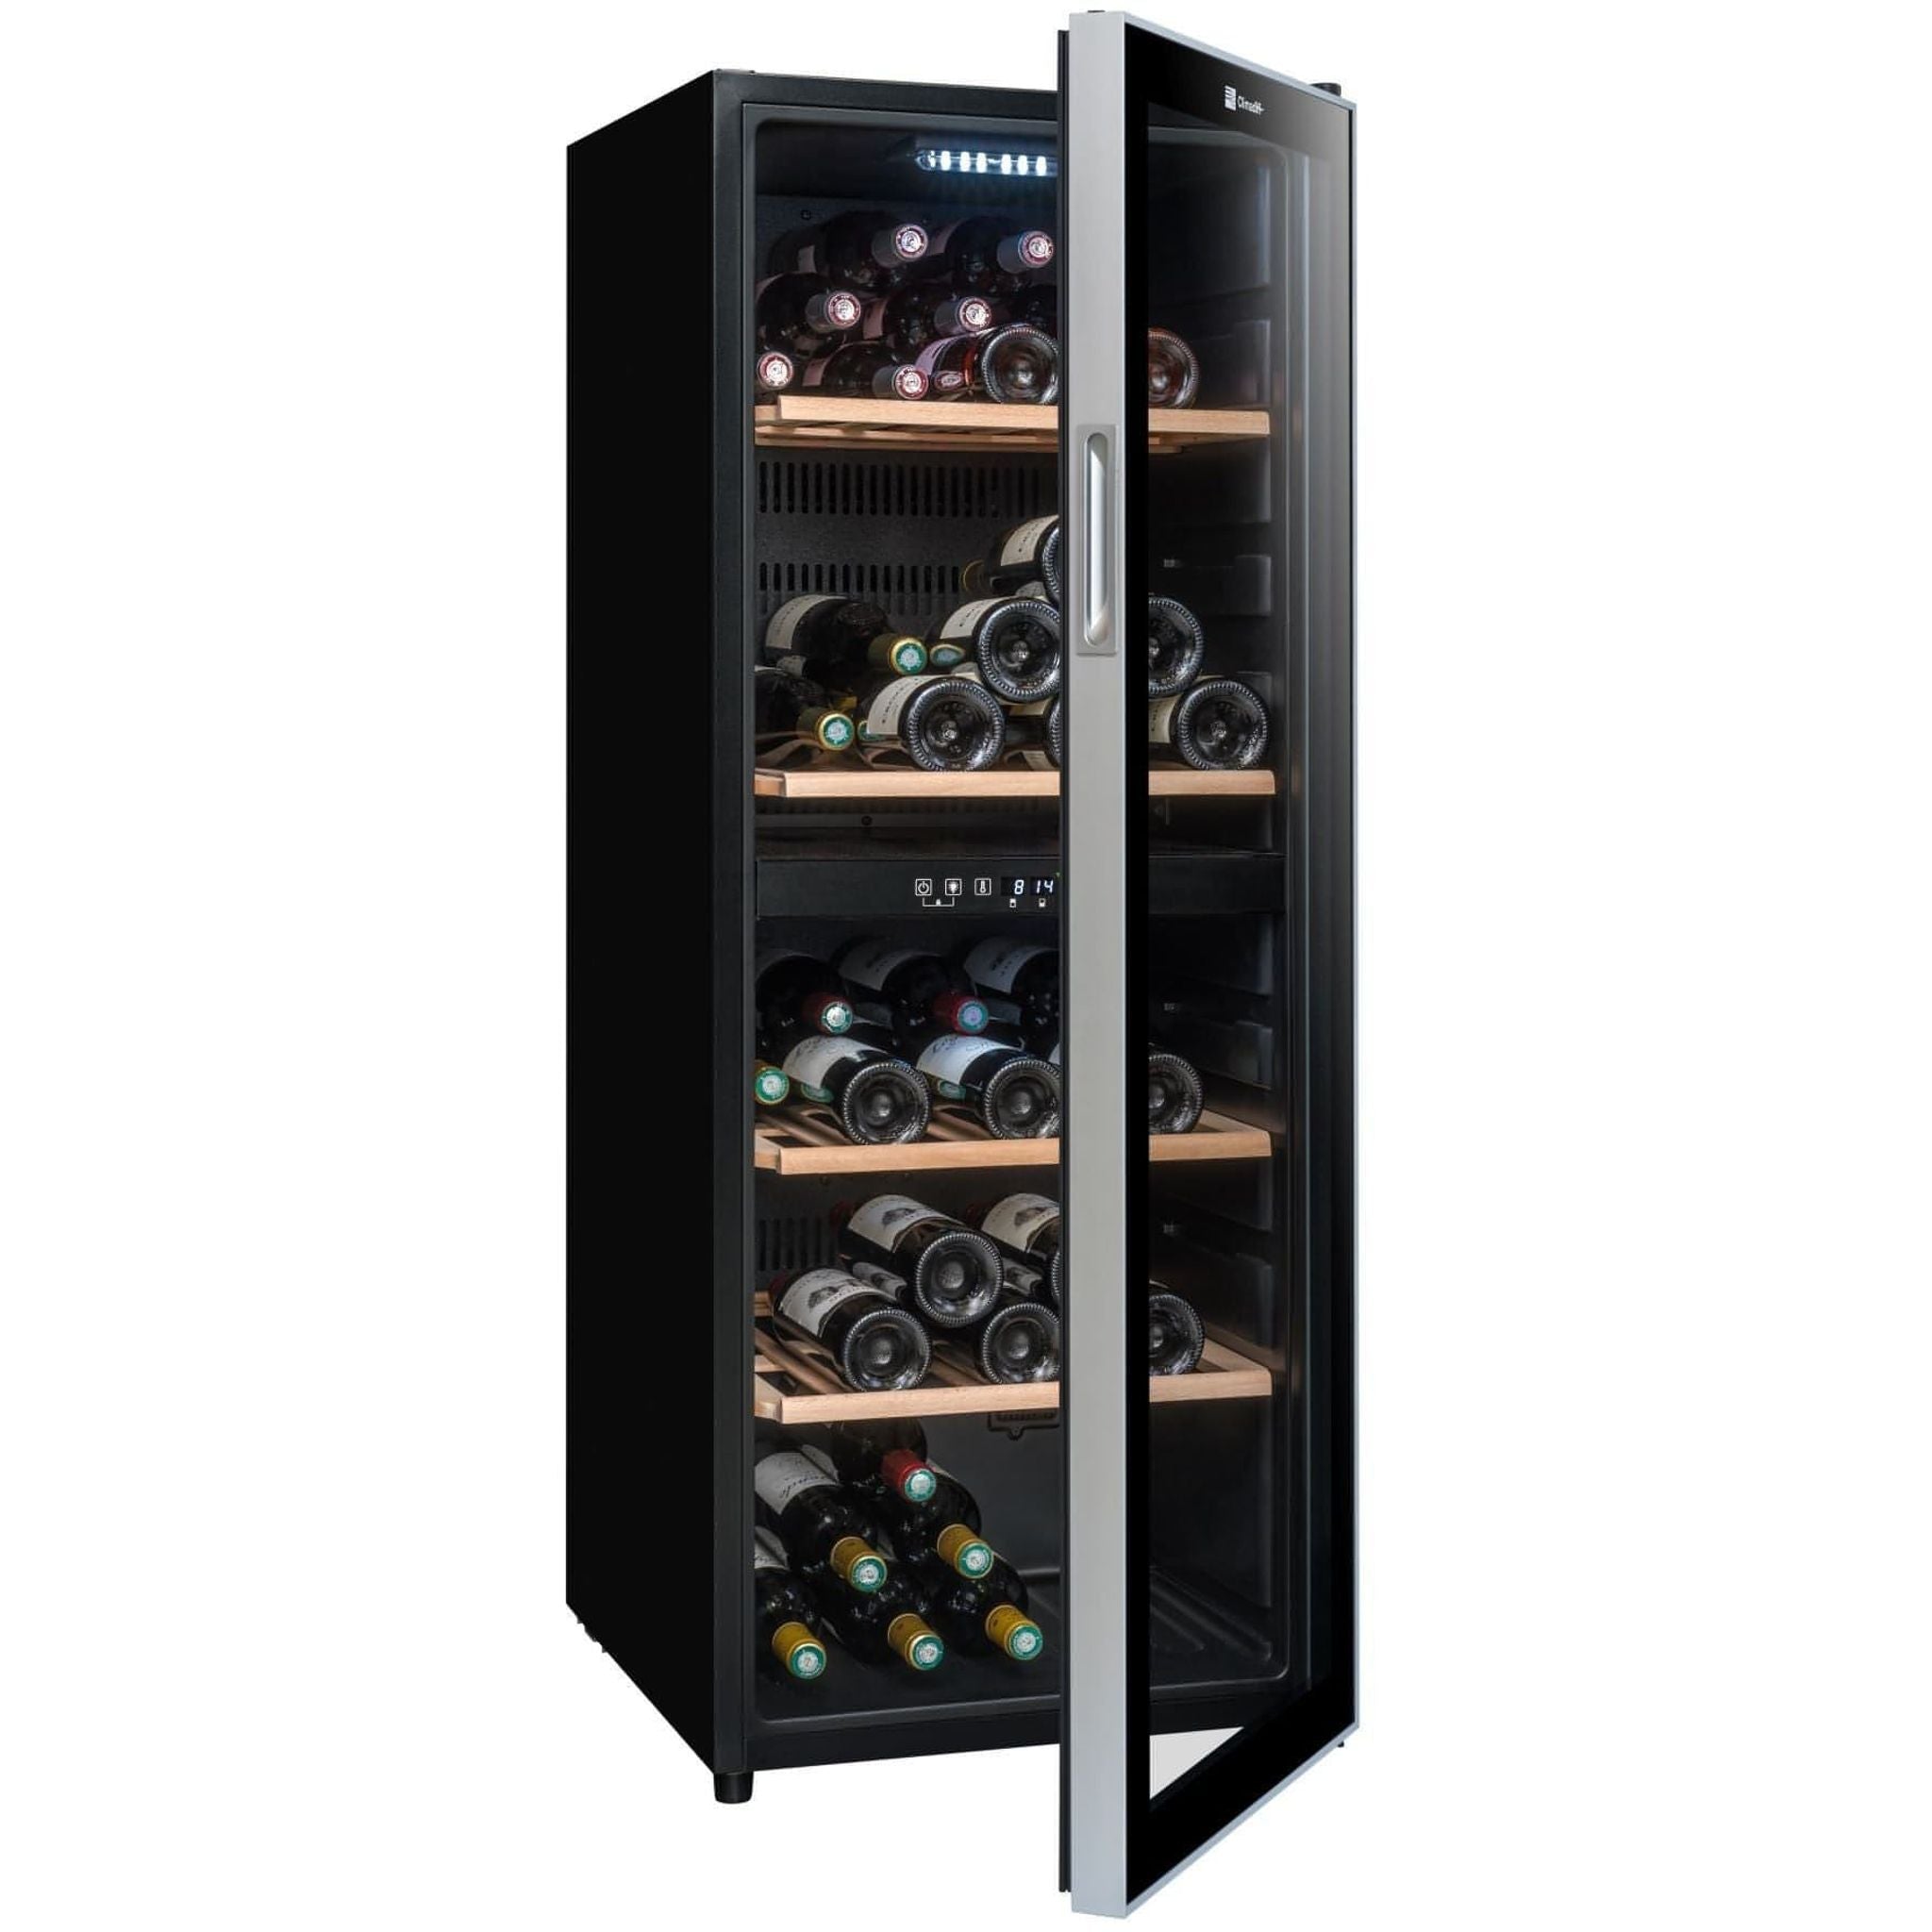 Climadiff - Dual Zone - 91 Bottle Freestanding Wine Cooler - CD90B1